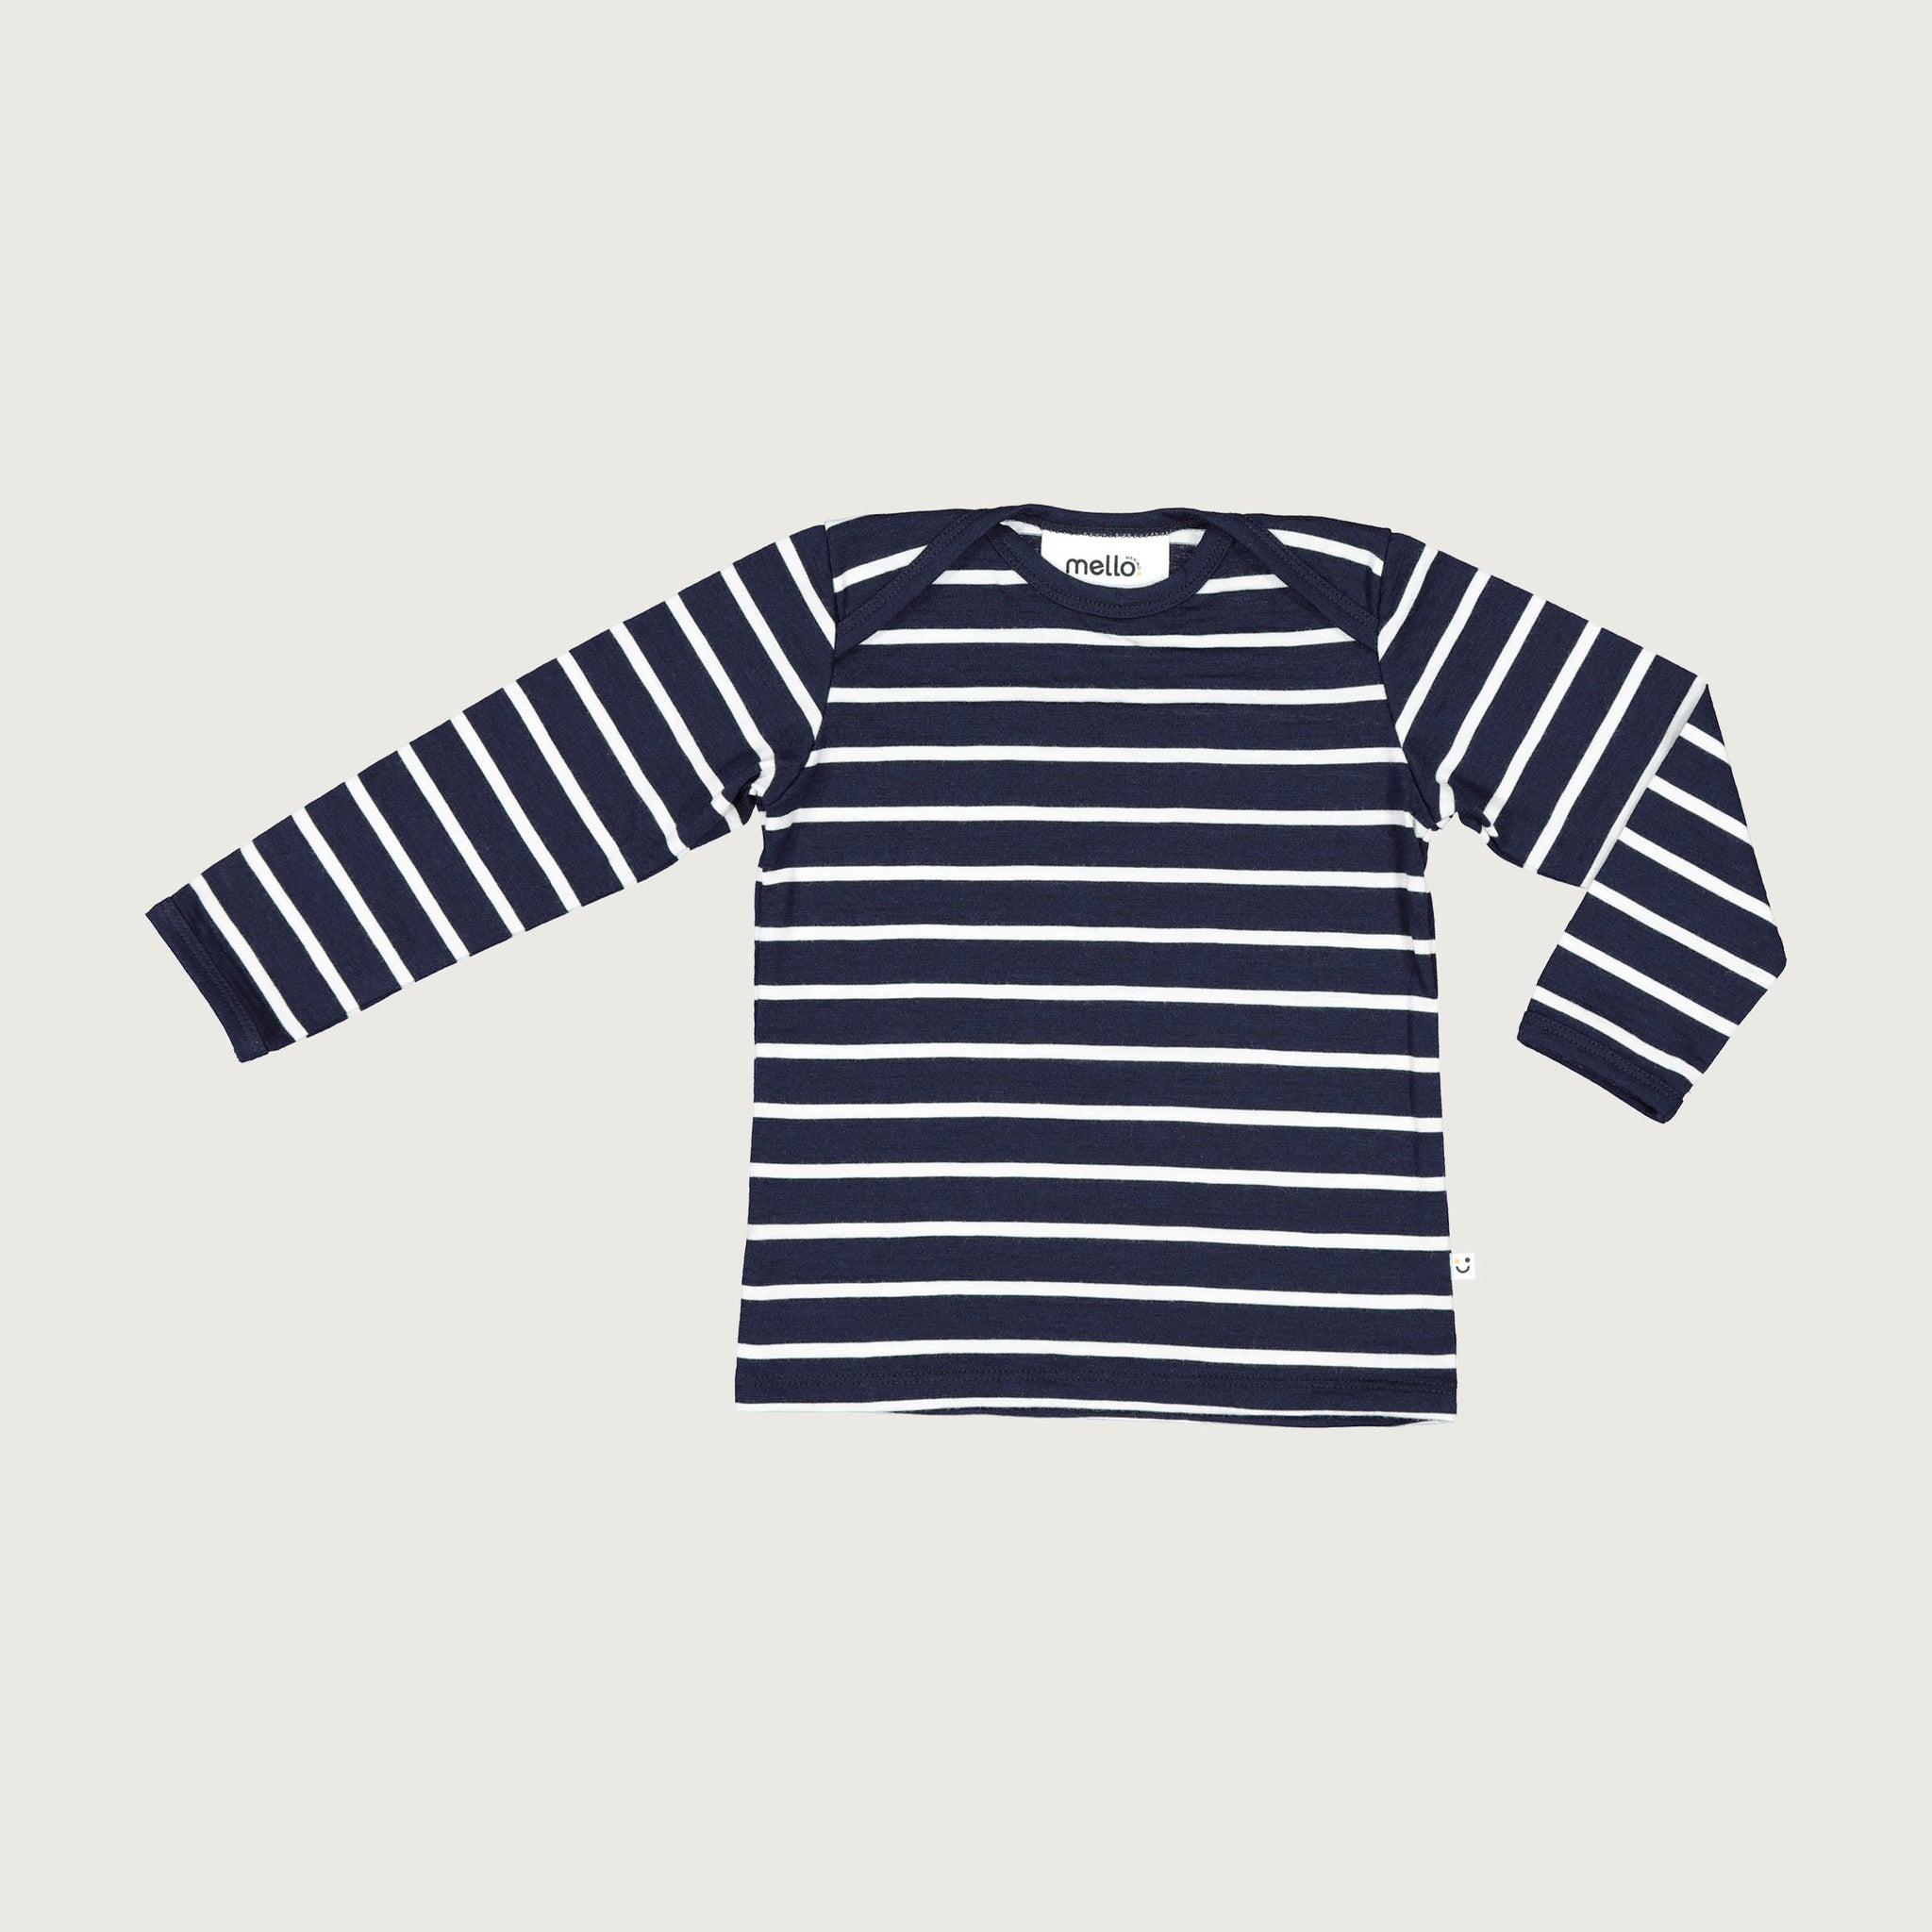 Merino baby long sleeve top navy Breton stripes